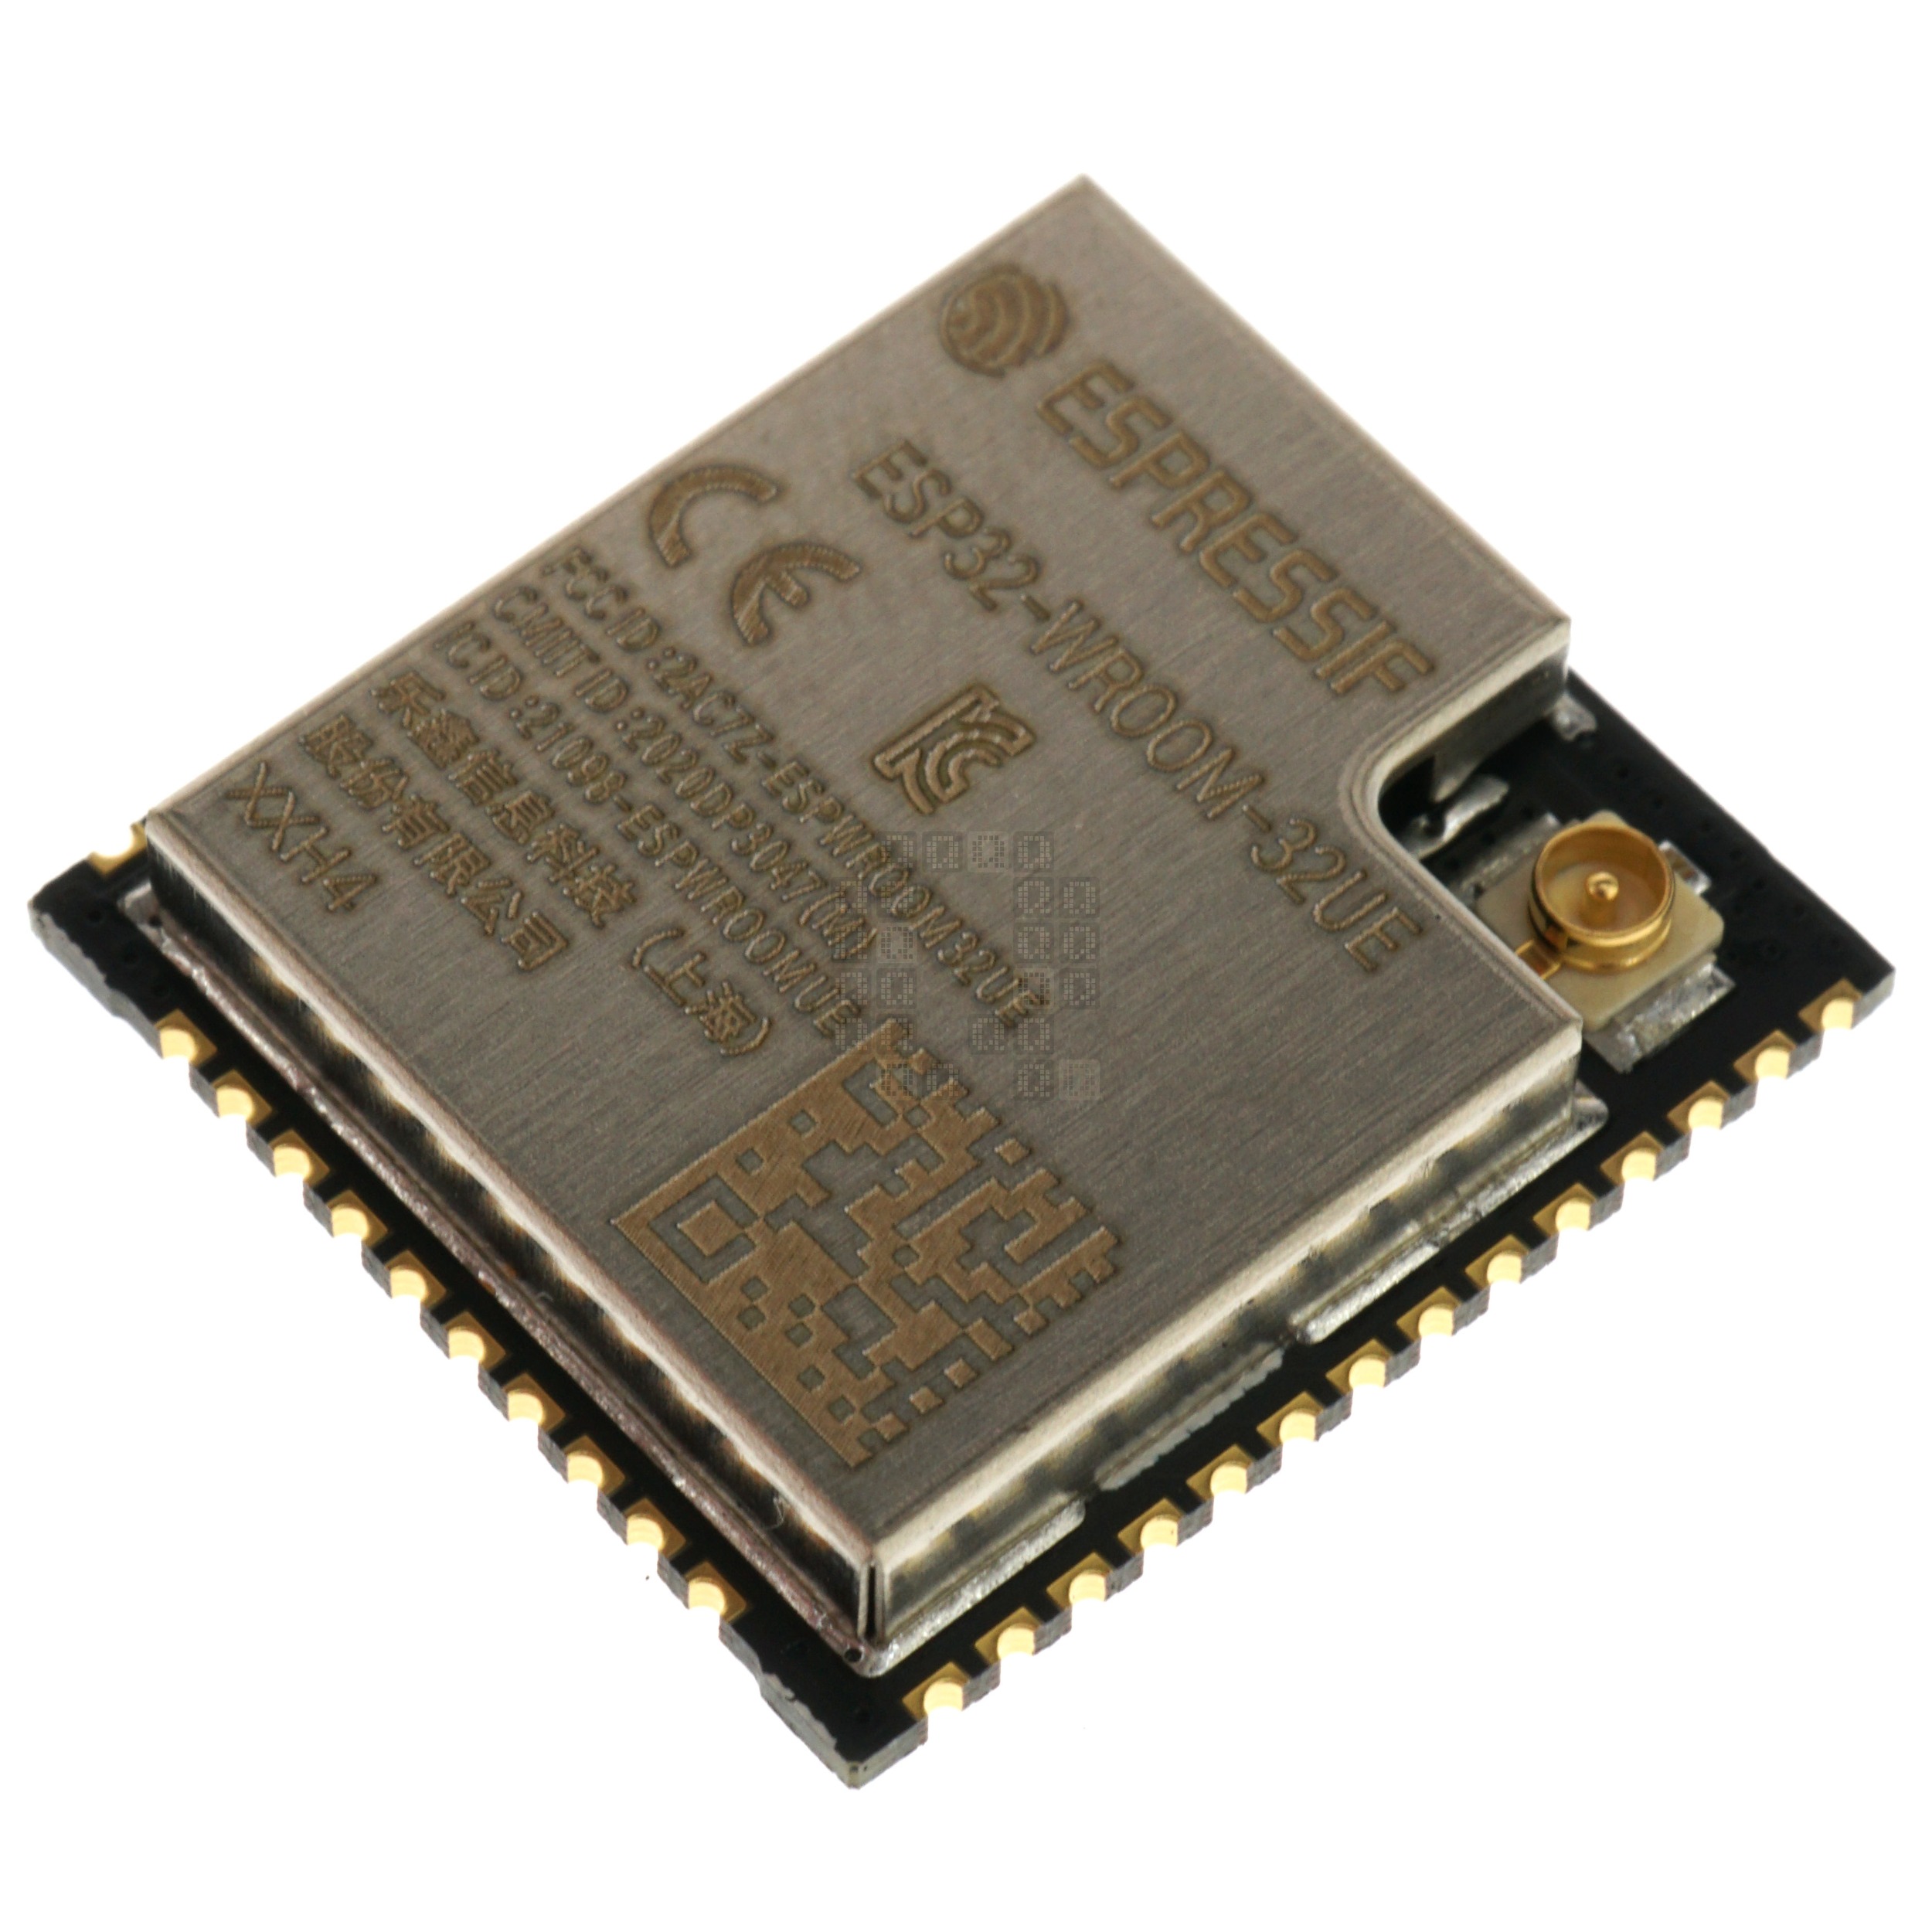 ESP32-H2 Microcontroller, 96MHz Processor, ESP32-H2-MINI-1-N4 Module, Built  in 4MB Flash, supports BLE/Zigbee/Thread wireless communication